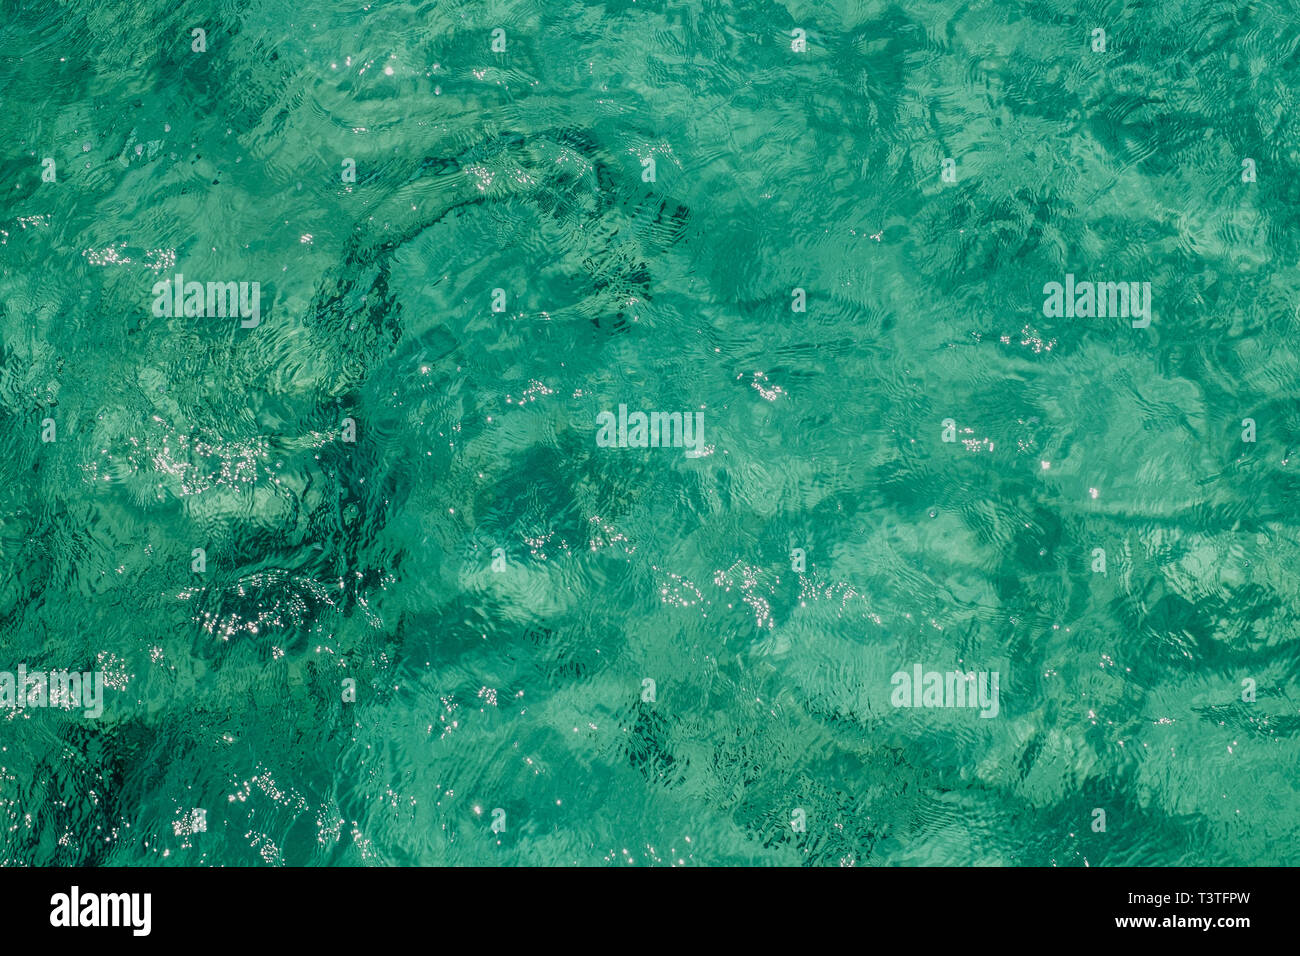 Emerald clean transparet sea water texture. Stock Photo